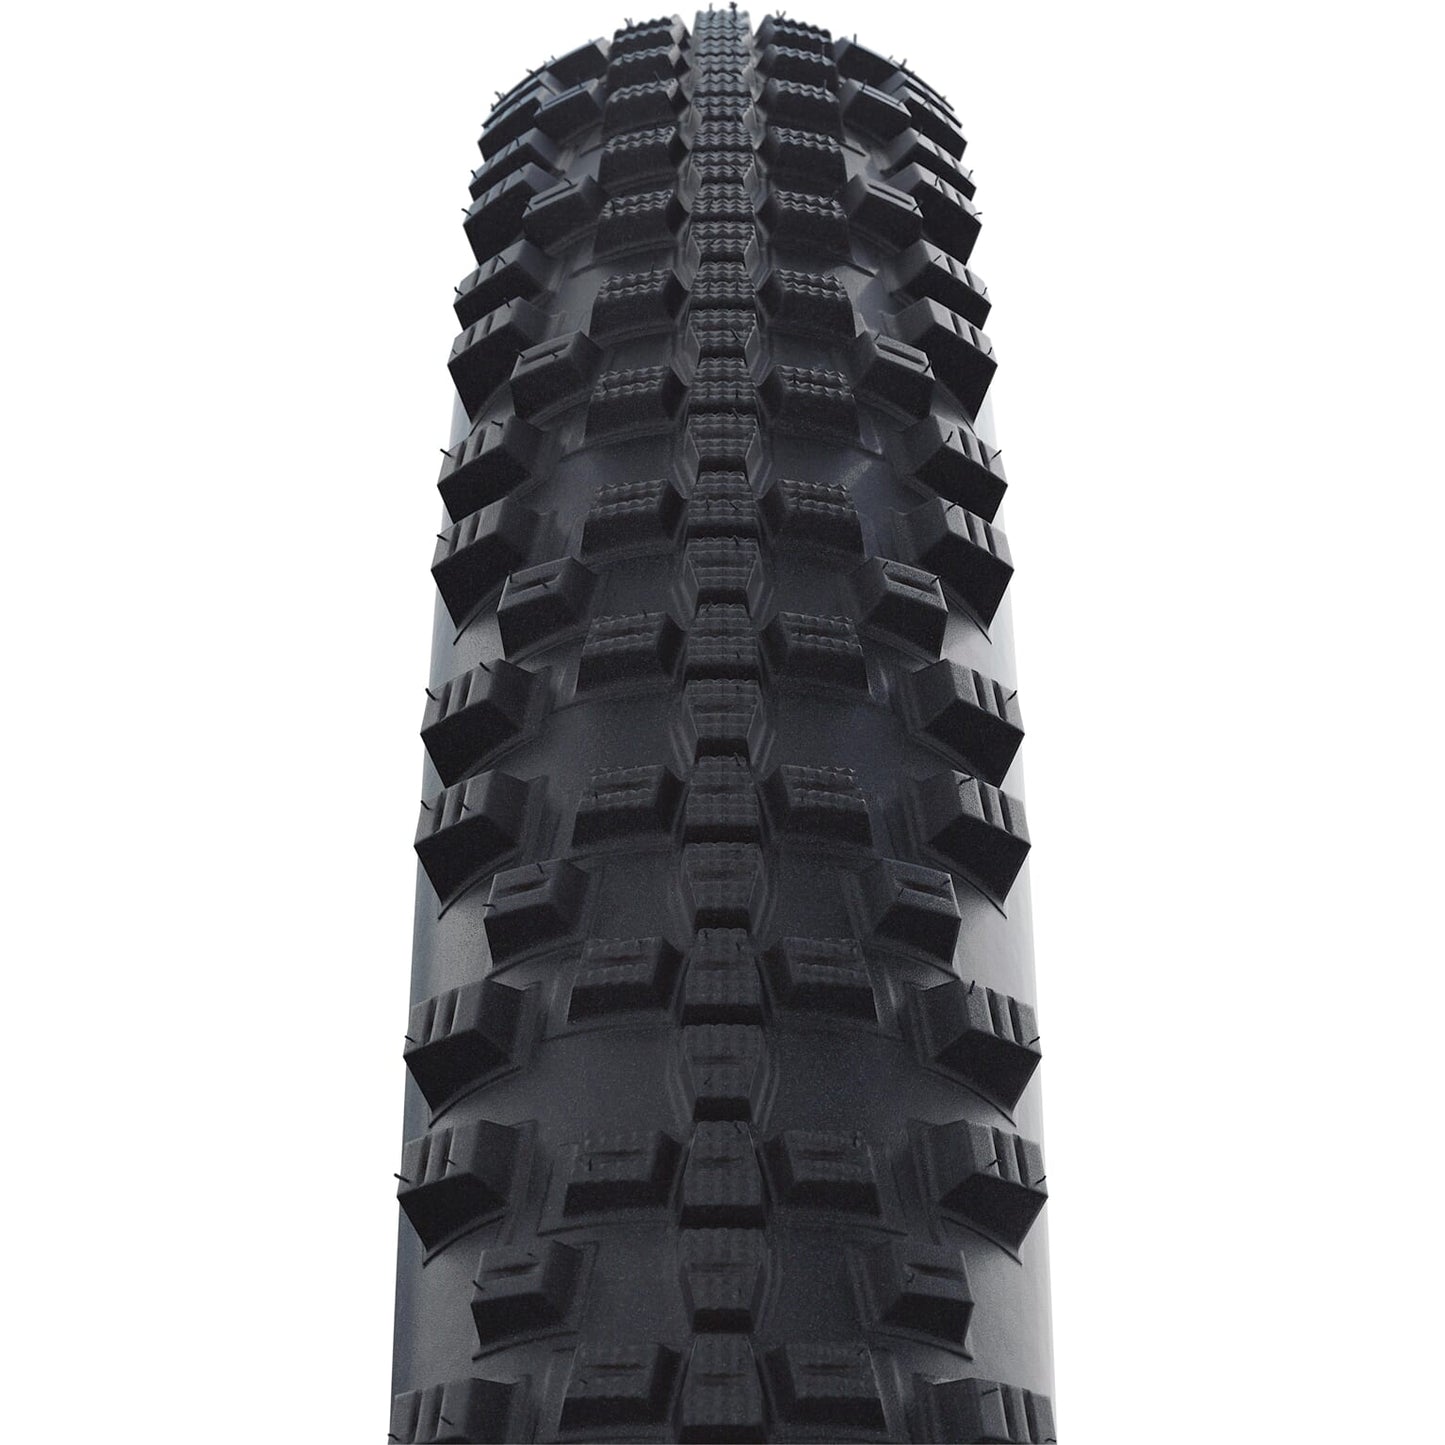 Schwalbe Tire Smart Sam Performance 27.5 x 2.10 54-584 mm negro